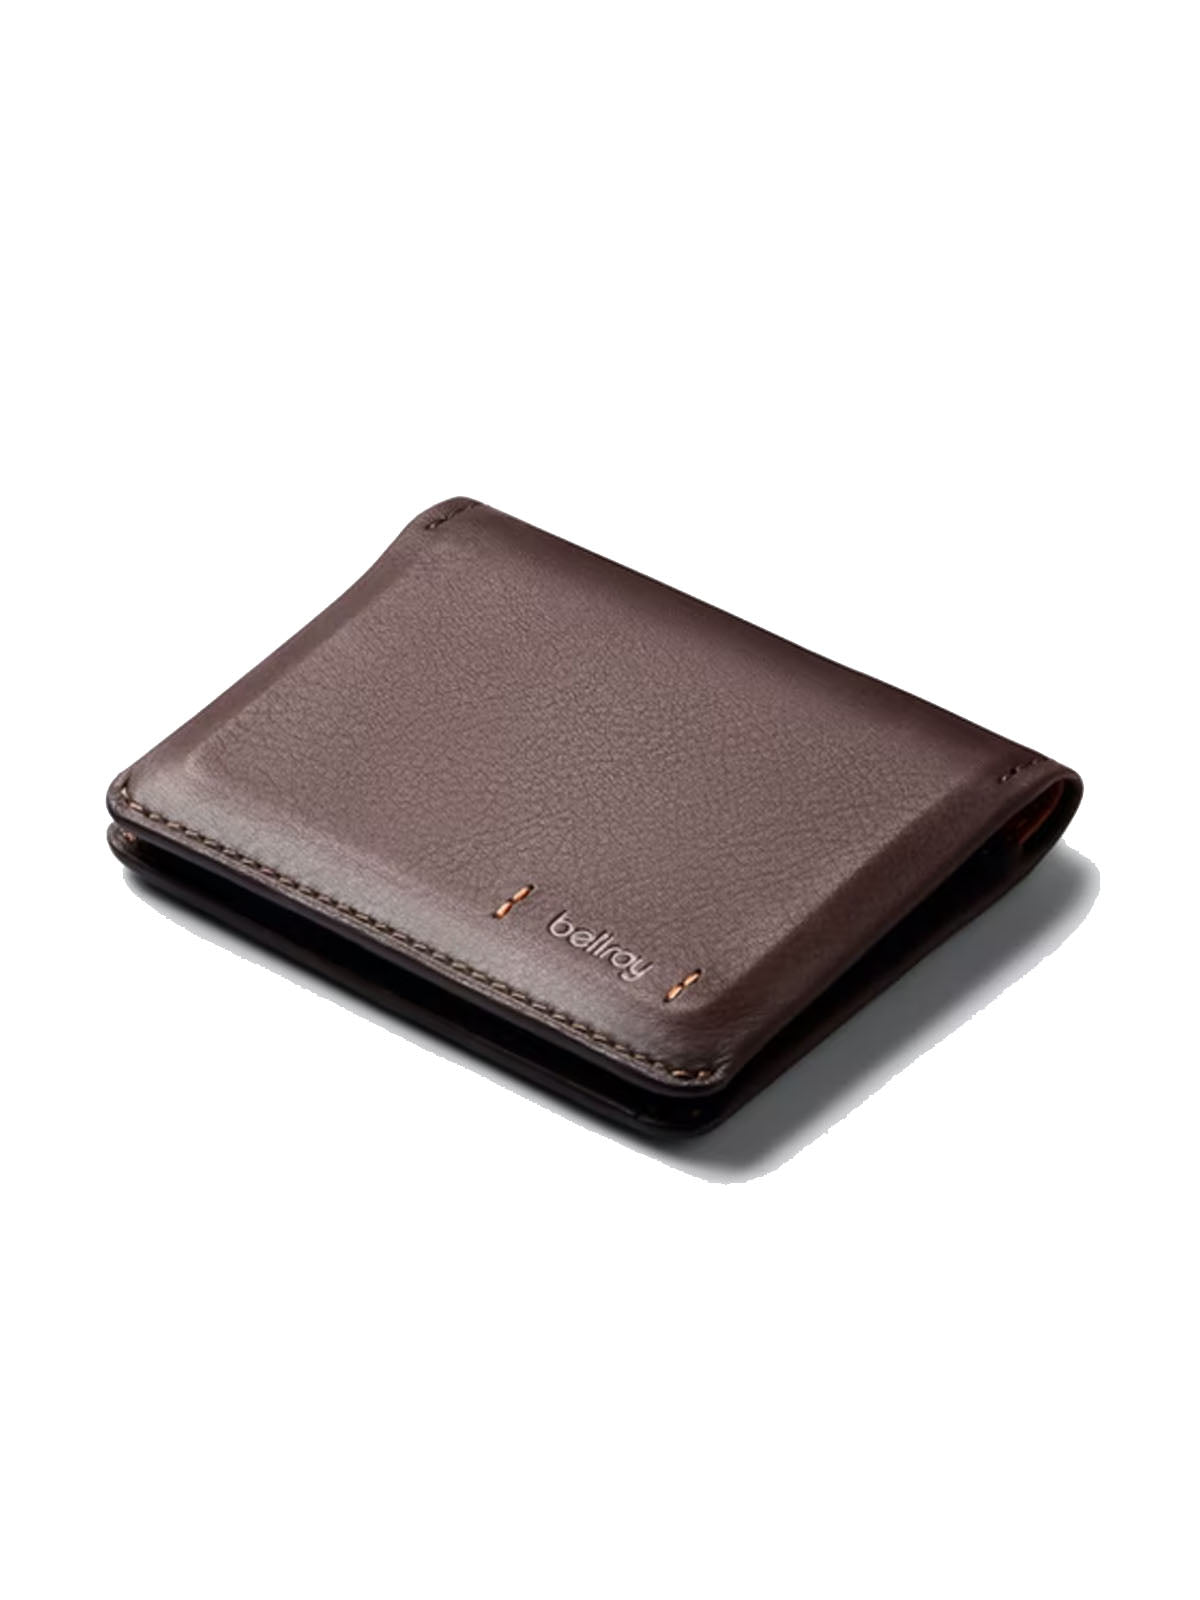 Bellroy Slim Sleeve Wallet Premium Edition Aragon RFID